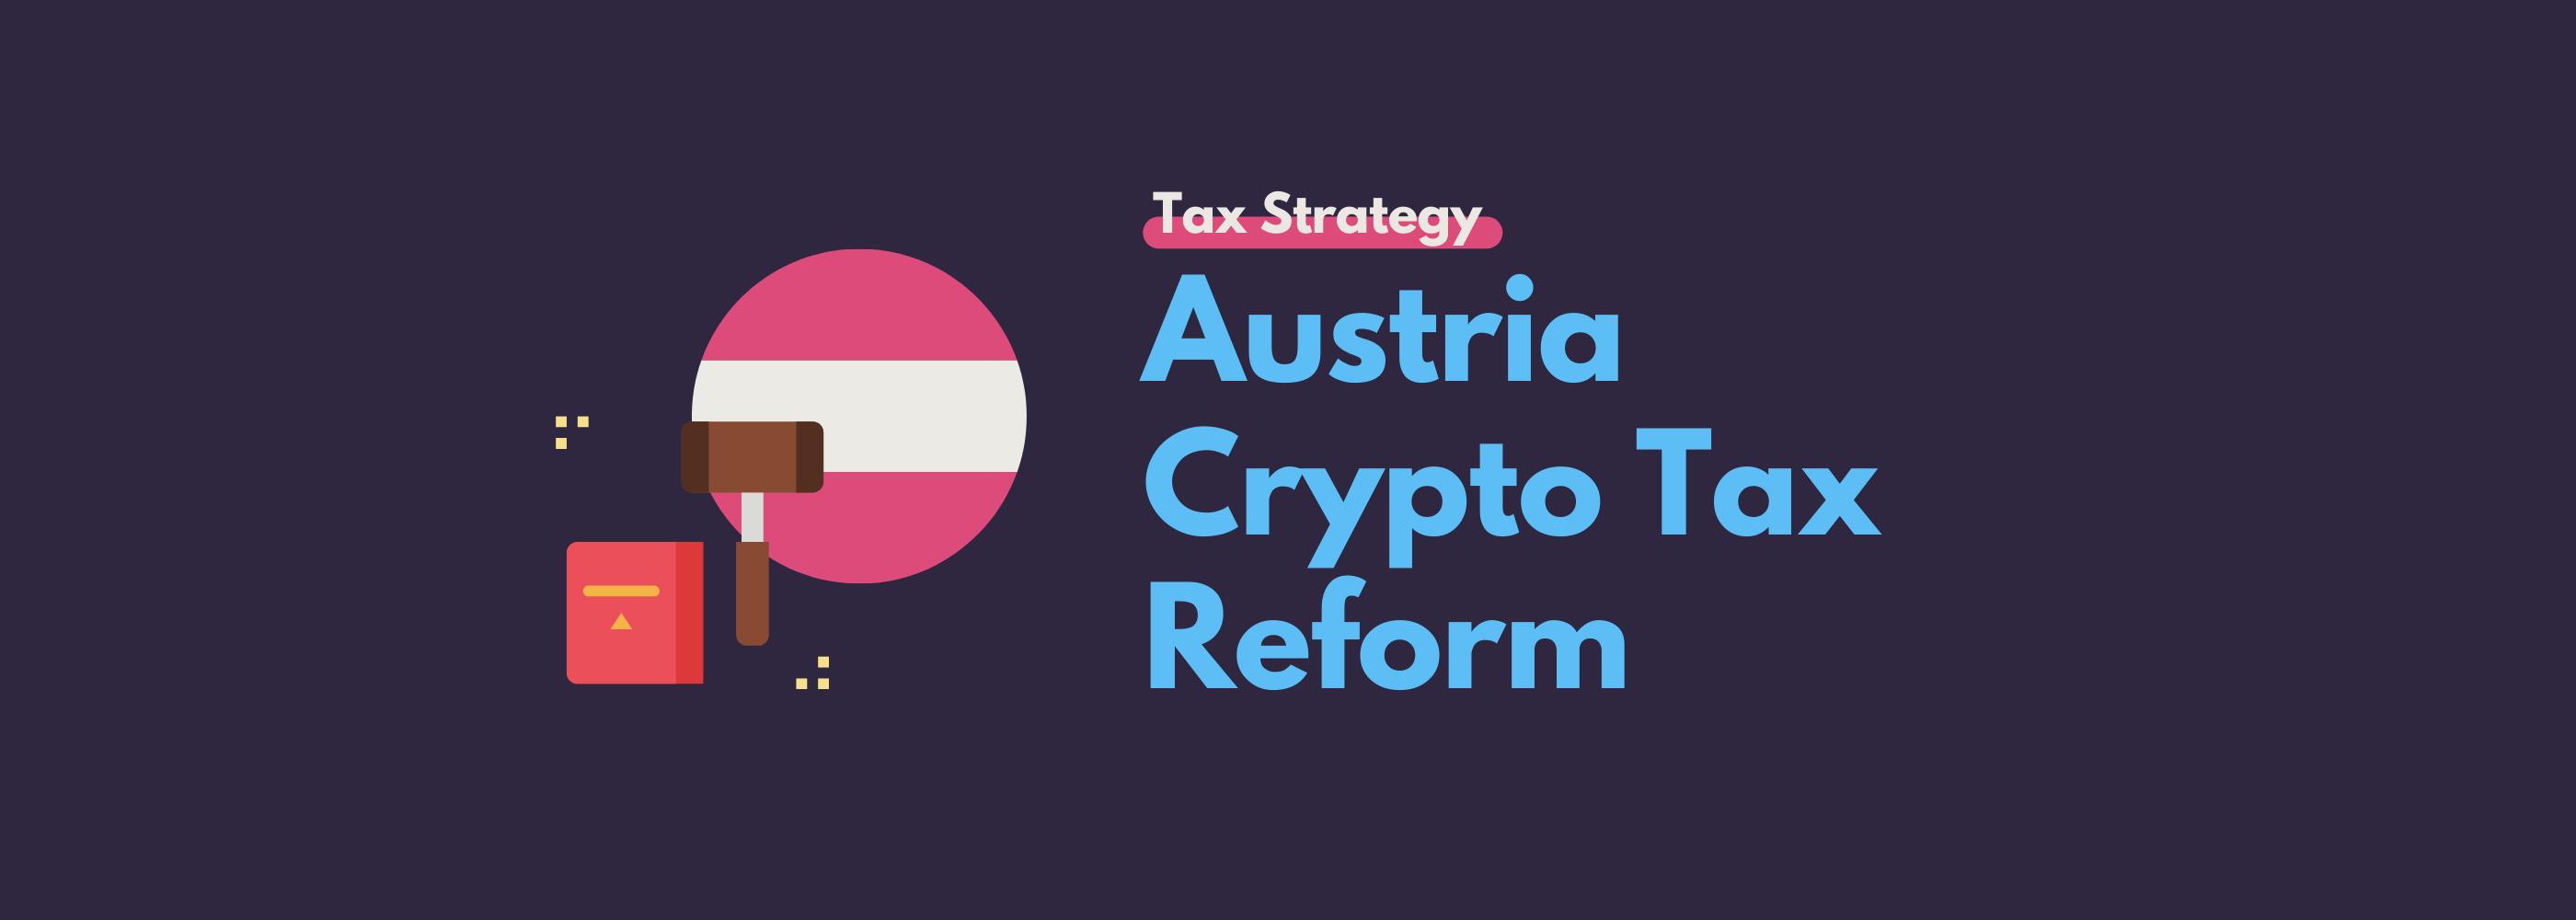 Austria crypto tax reform